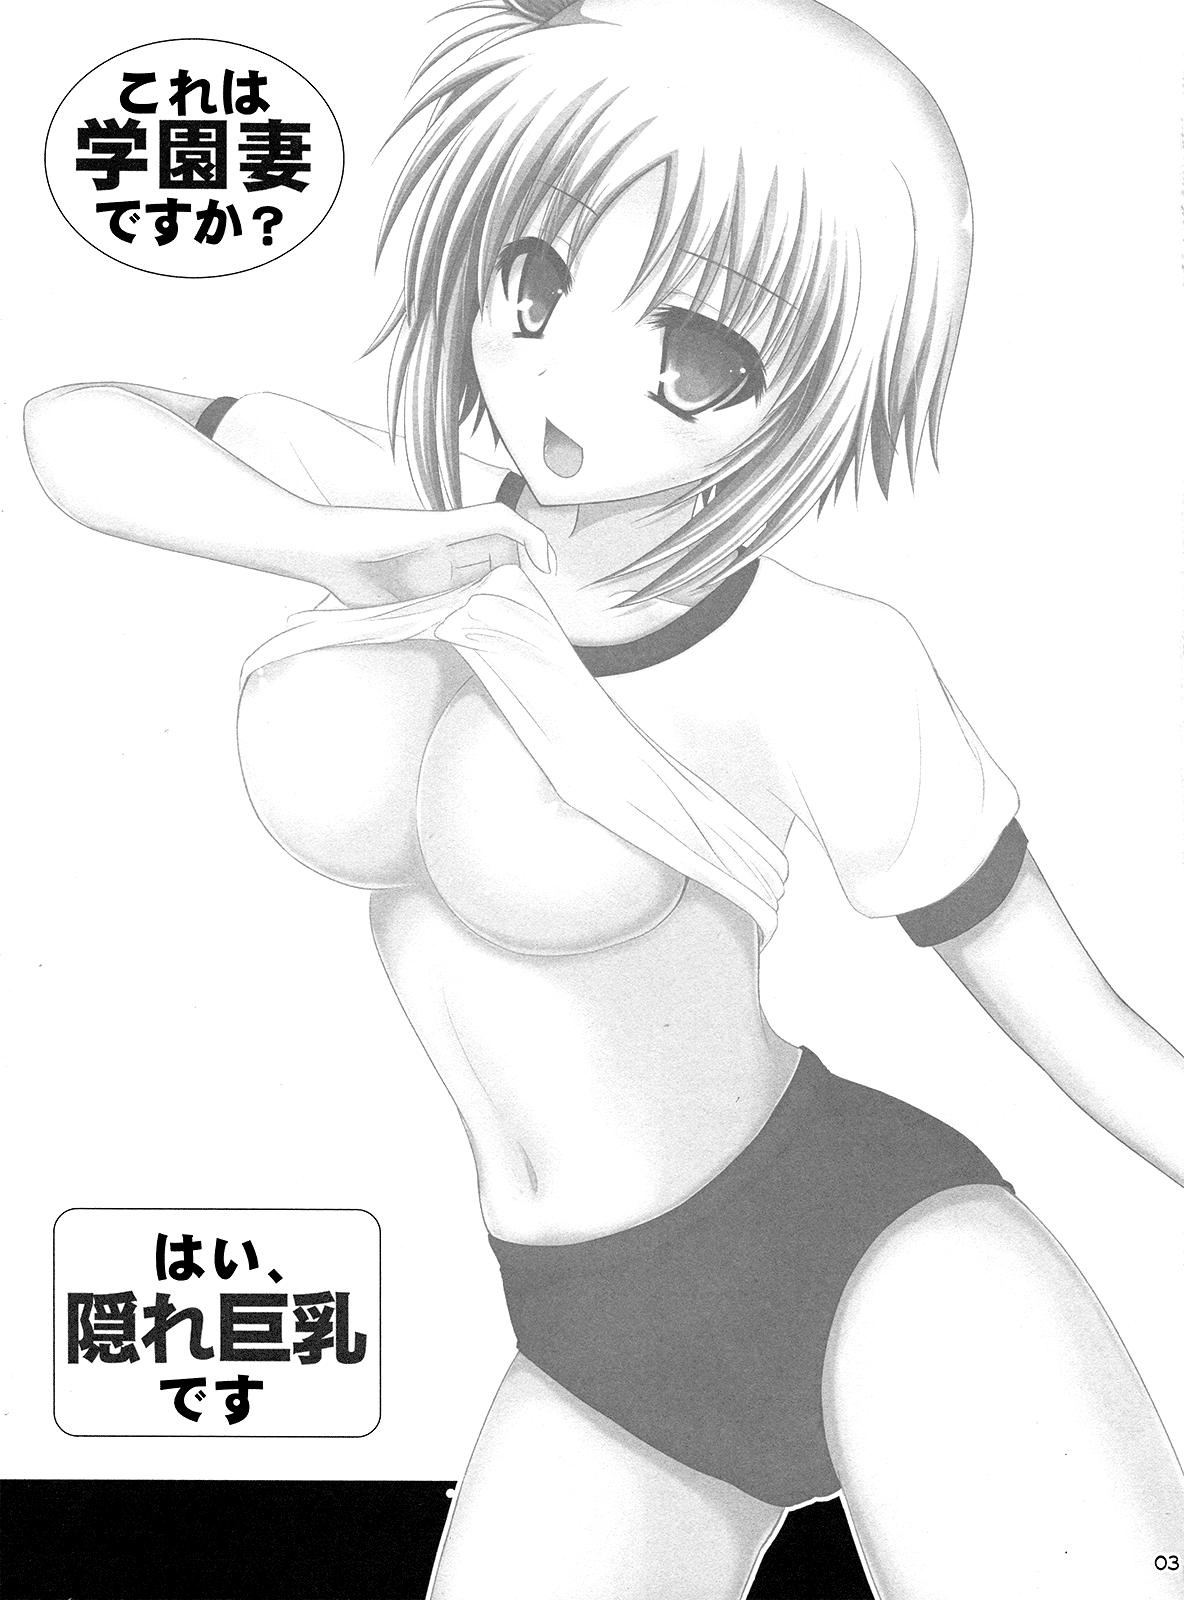 Casa Is This A School Wife? Yes, She Secretly Has Big Breasts - Kore wa zombie desu ka Sapphic Erotica - Page 2